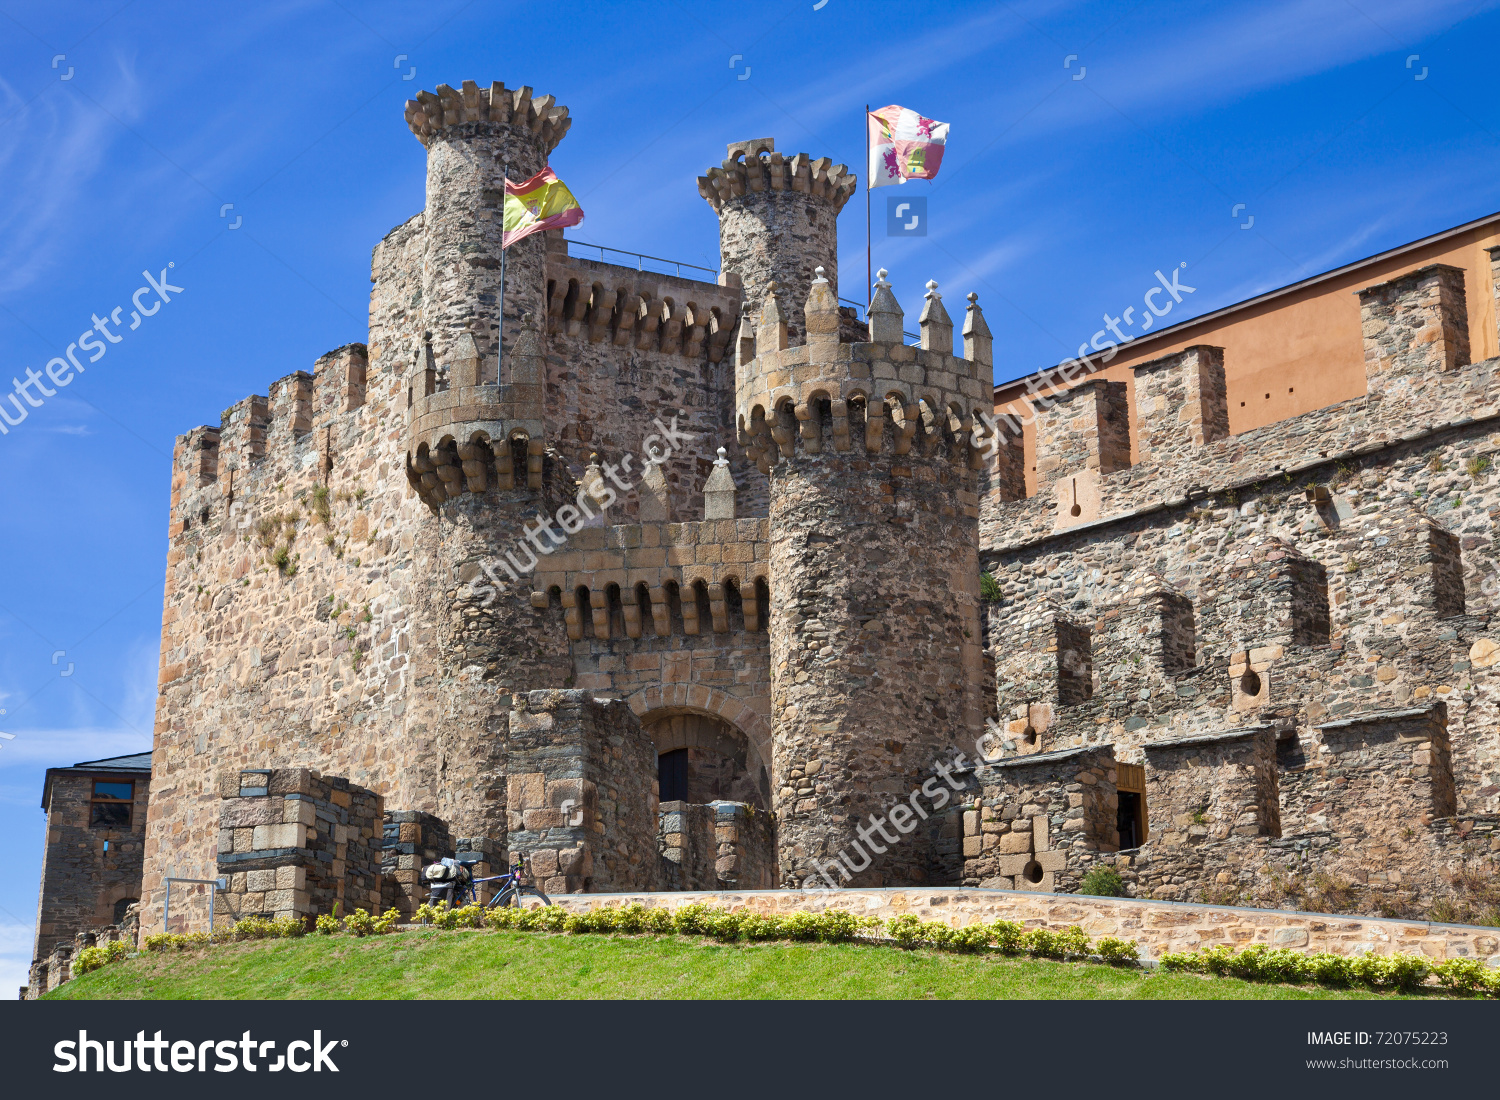 Nice Images Collection: Templar Castle Of Ponferrada Desktop Wallpapers